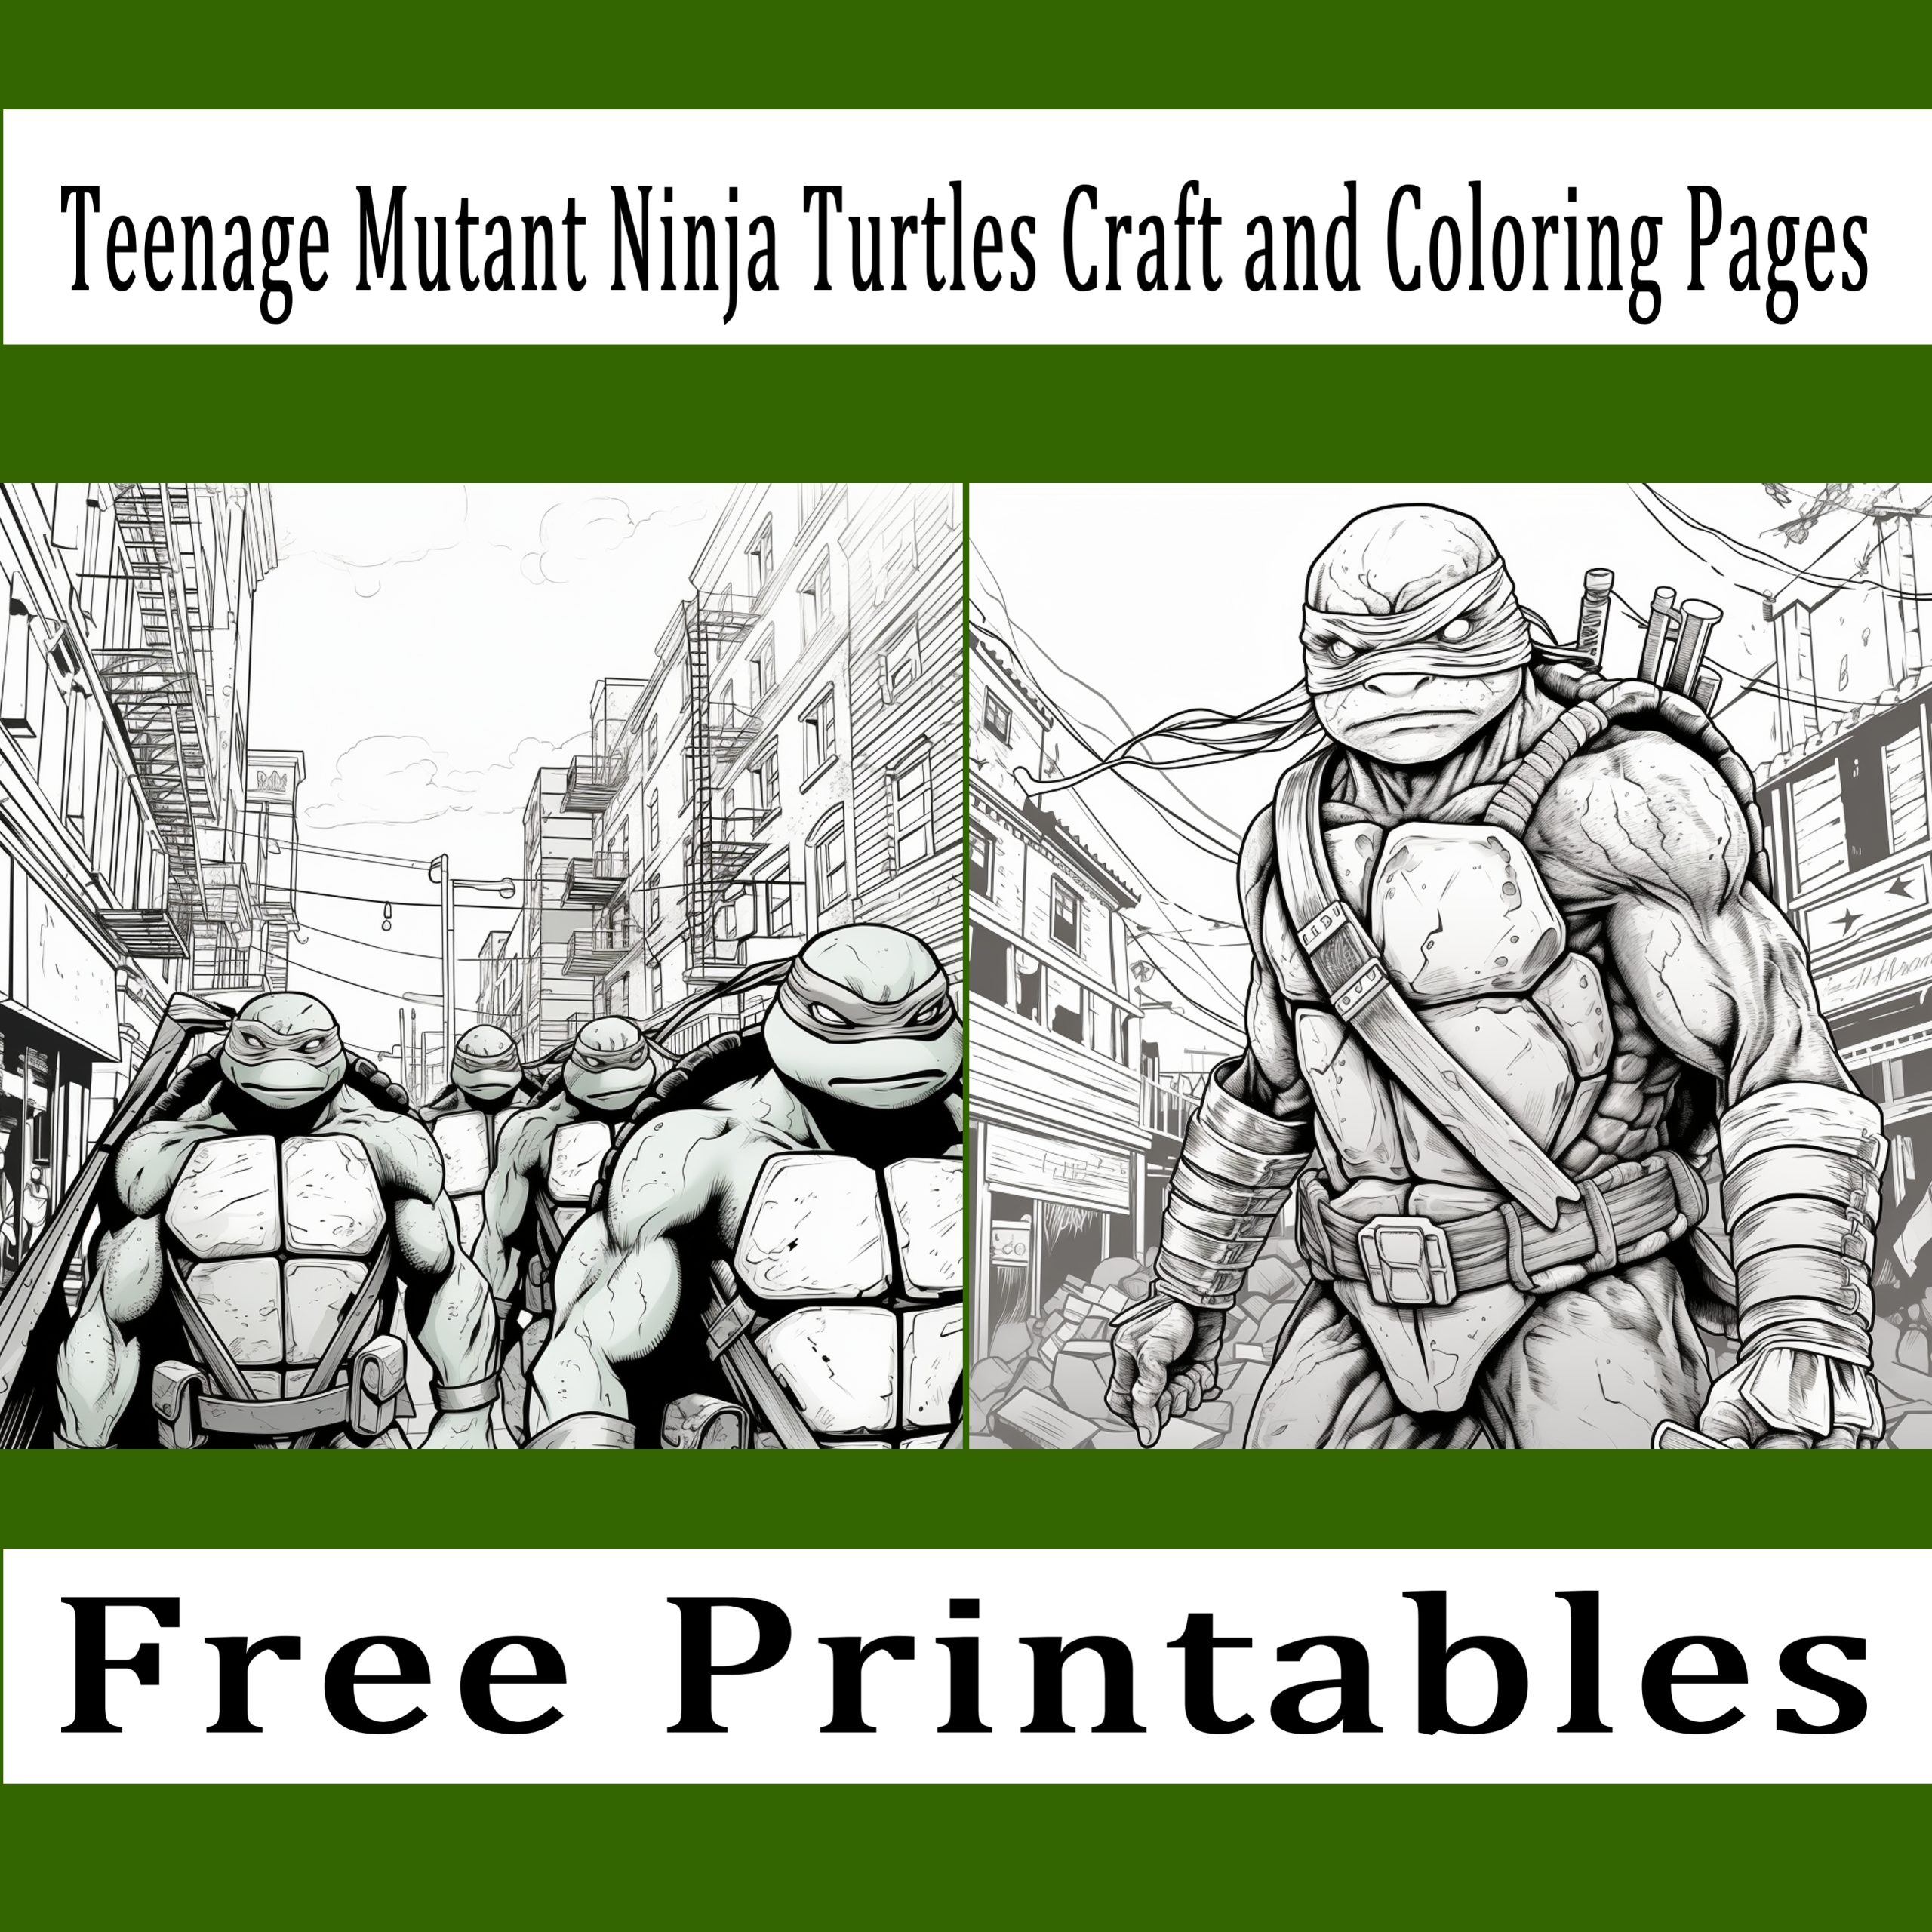 Teenage mutant ninja turtles craft and coloring pages